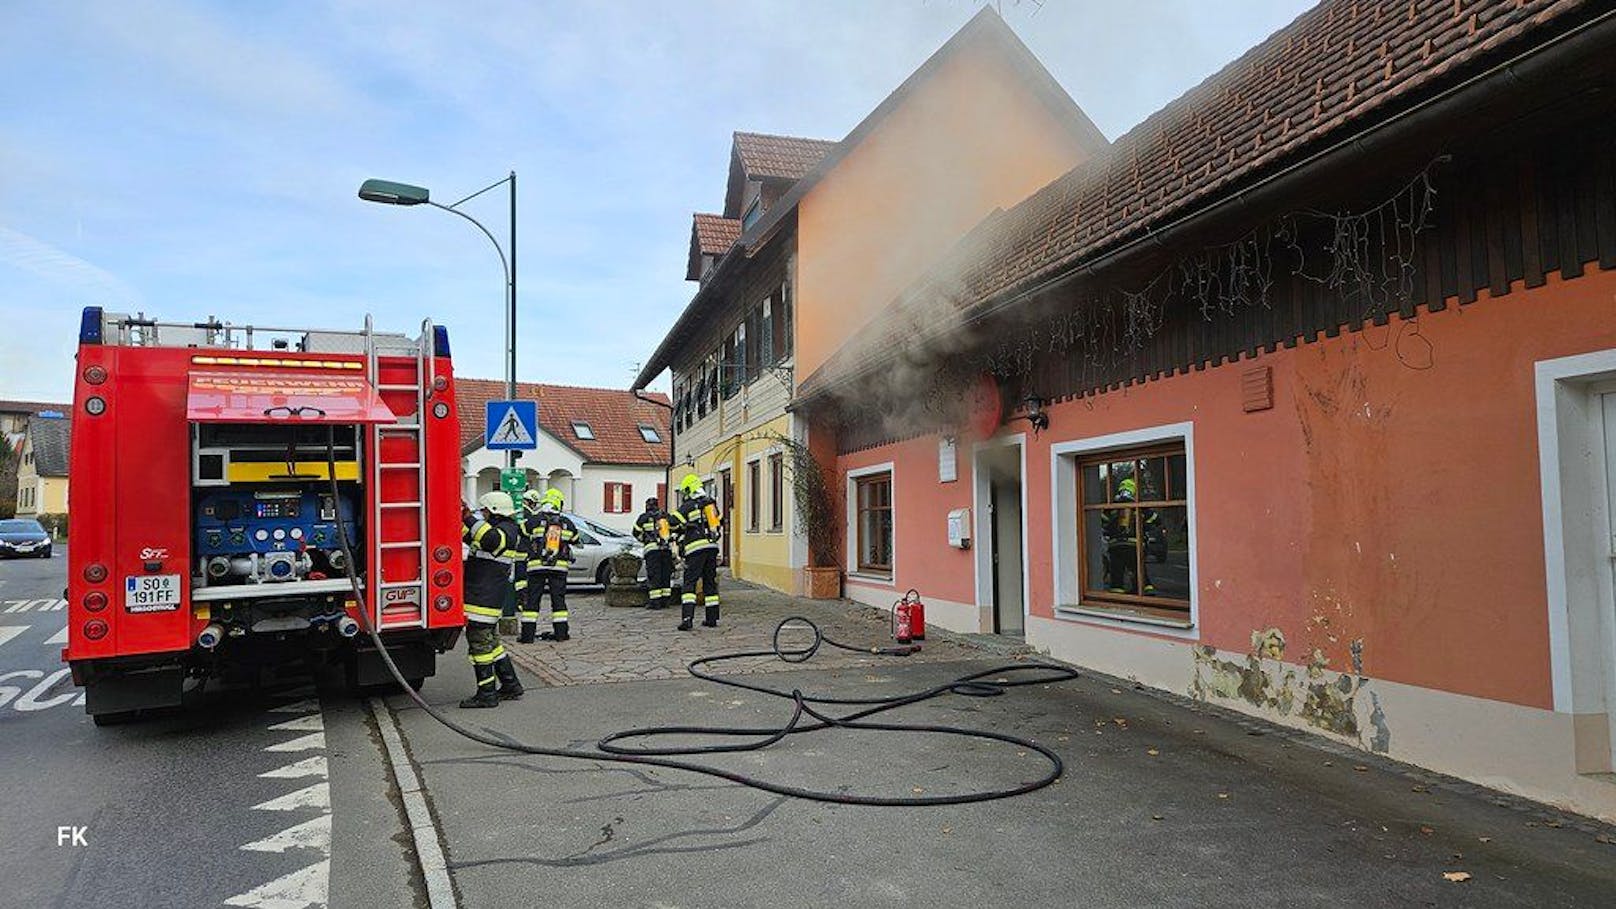 38 Feuerwehrleute löschten den Brand. 